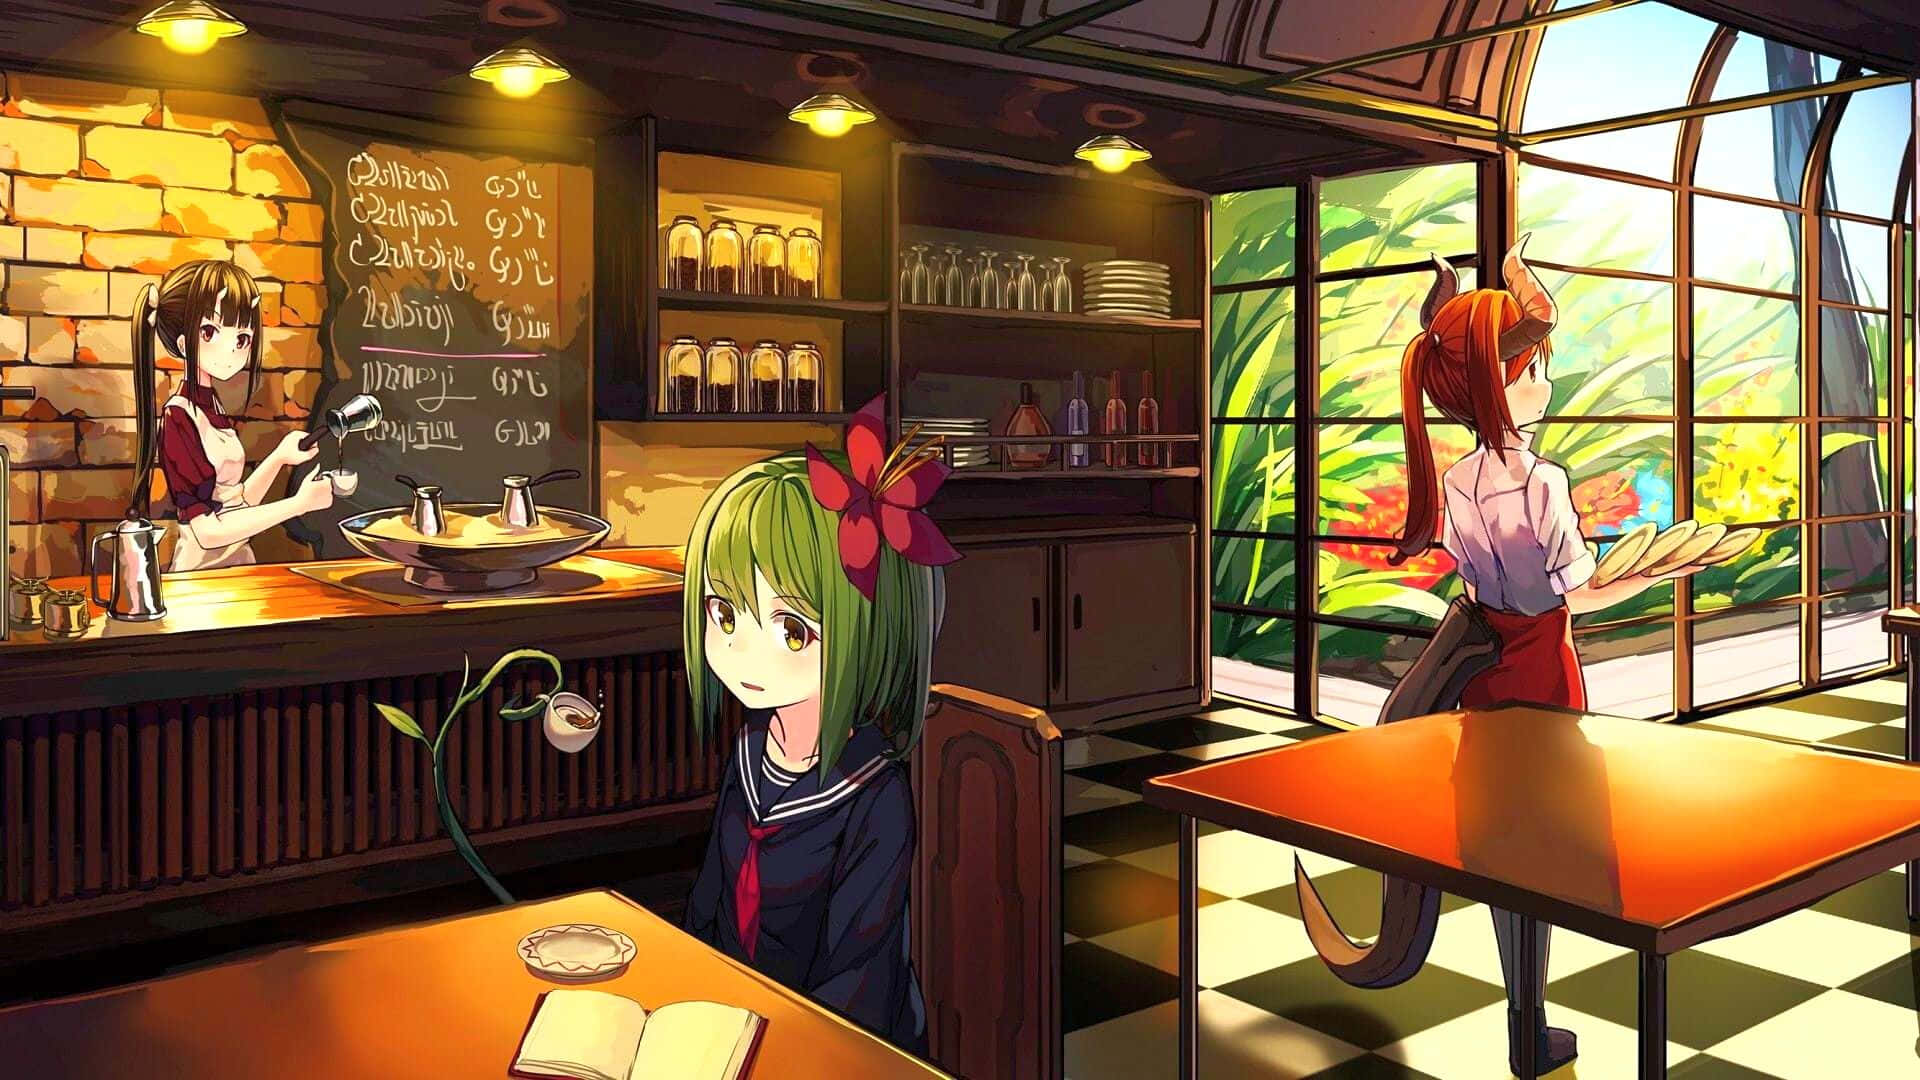 Student Anime Cafe Background